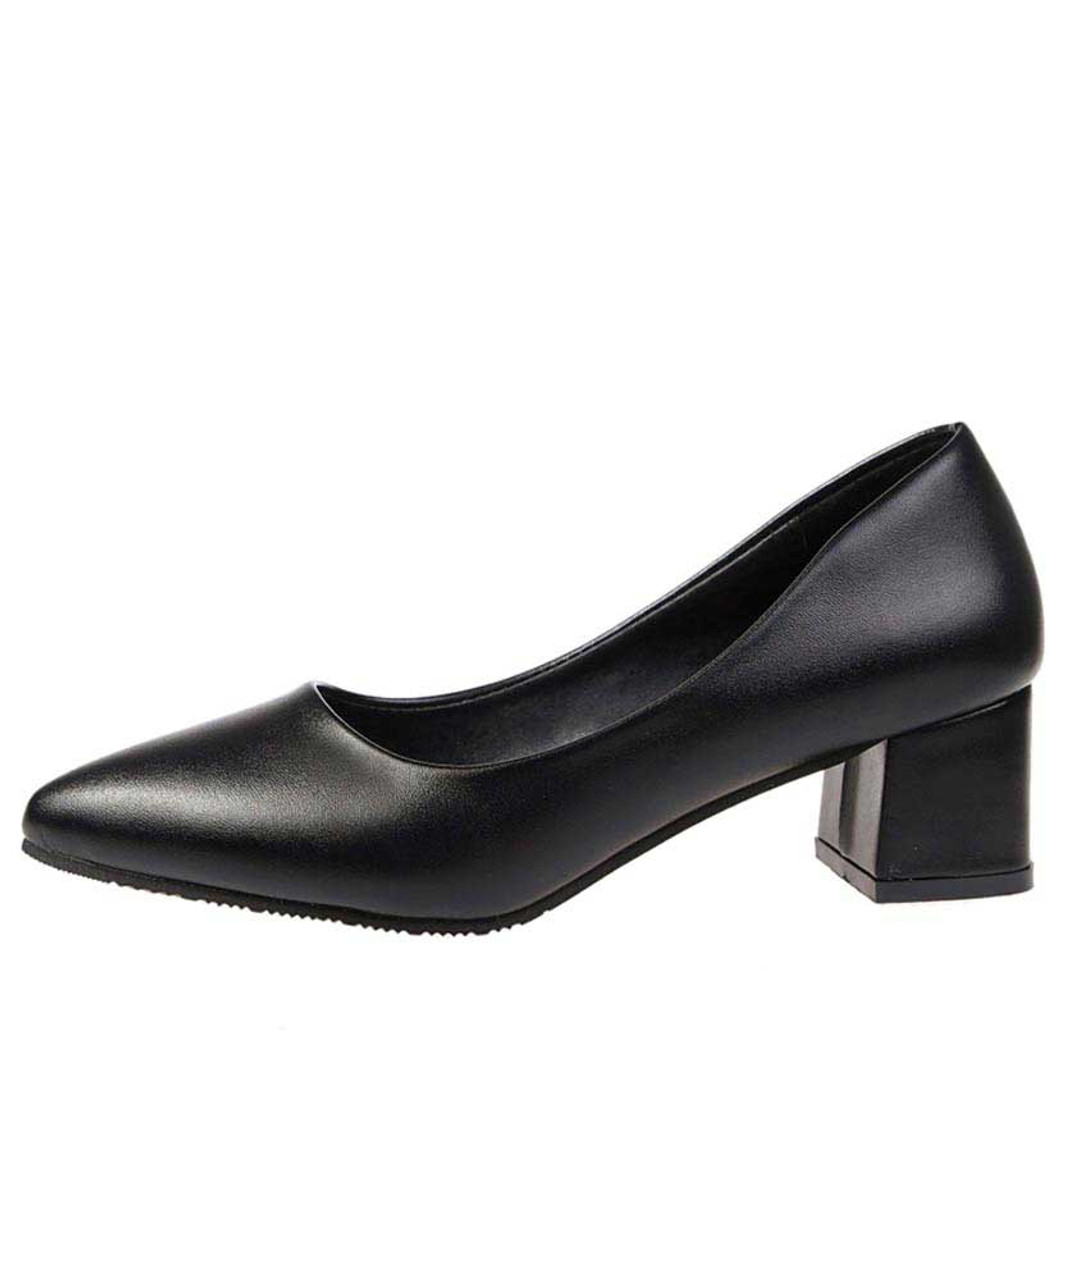 Black slip on mid thick heel dress shoe 